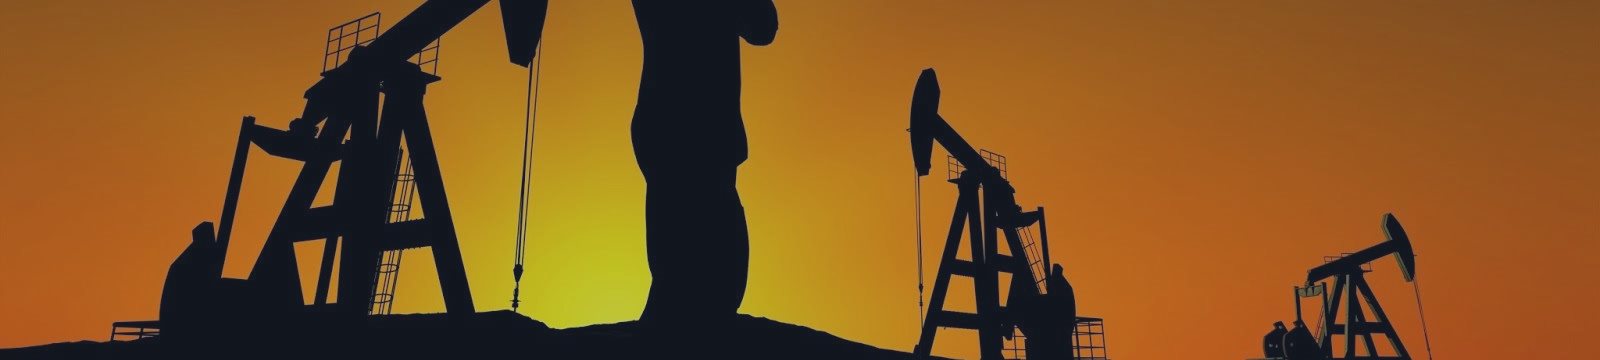 Сечин предрек ценам на нефть новые рекорды из-за санкций